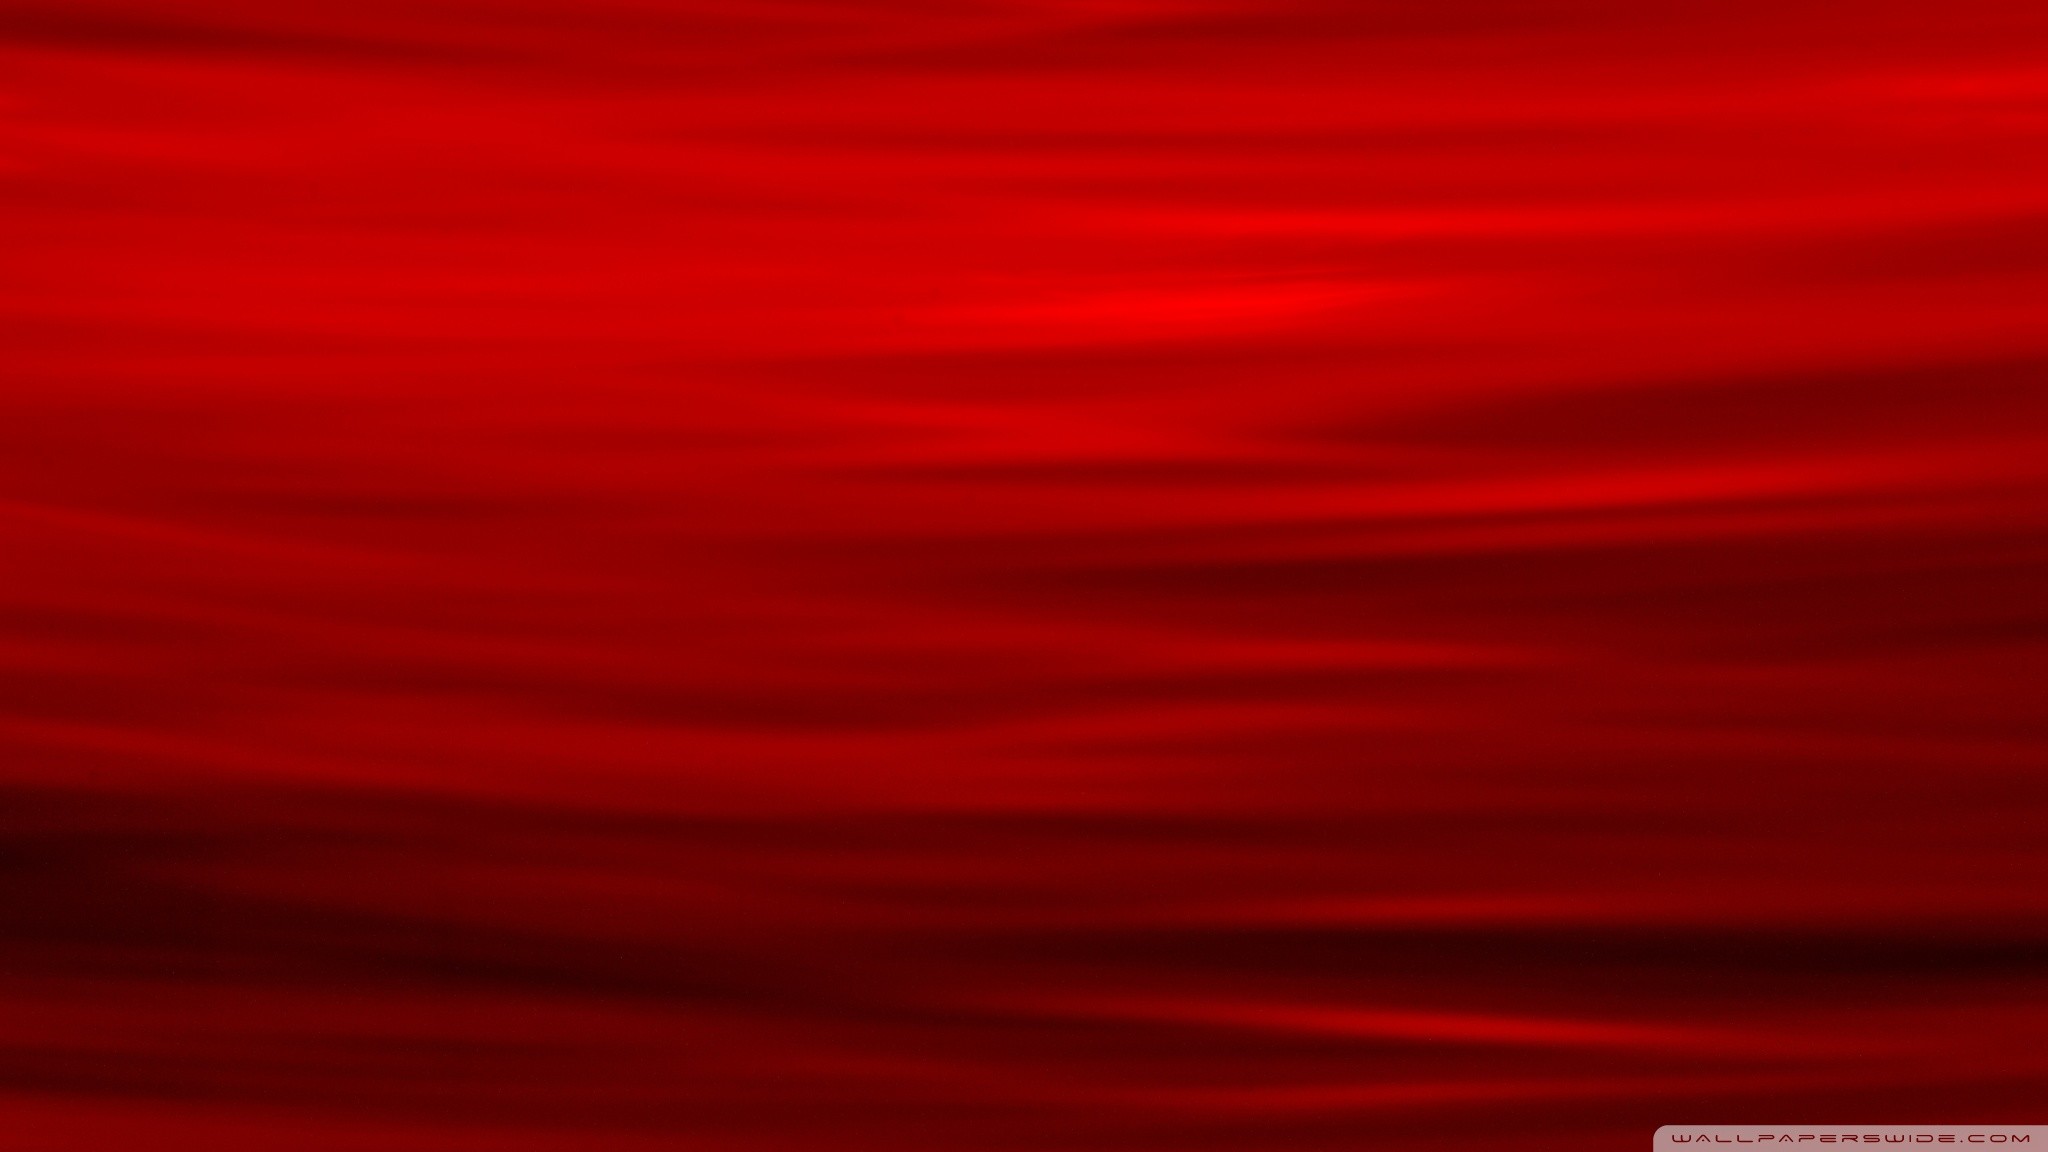 Dark Red Wallpaper Hd 65 Images